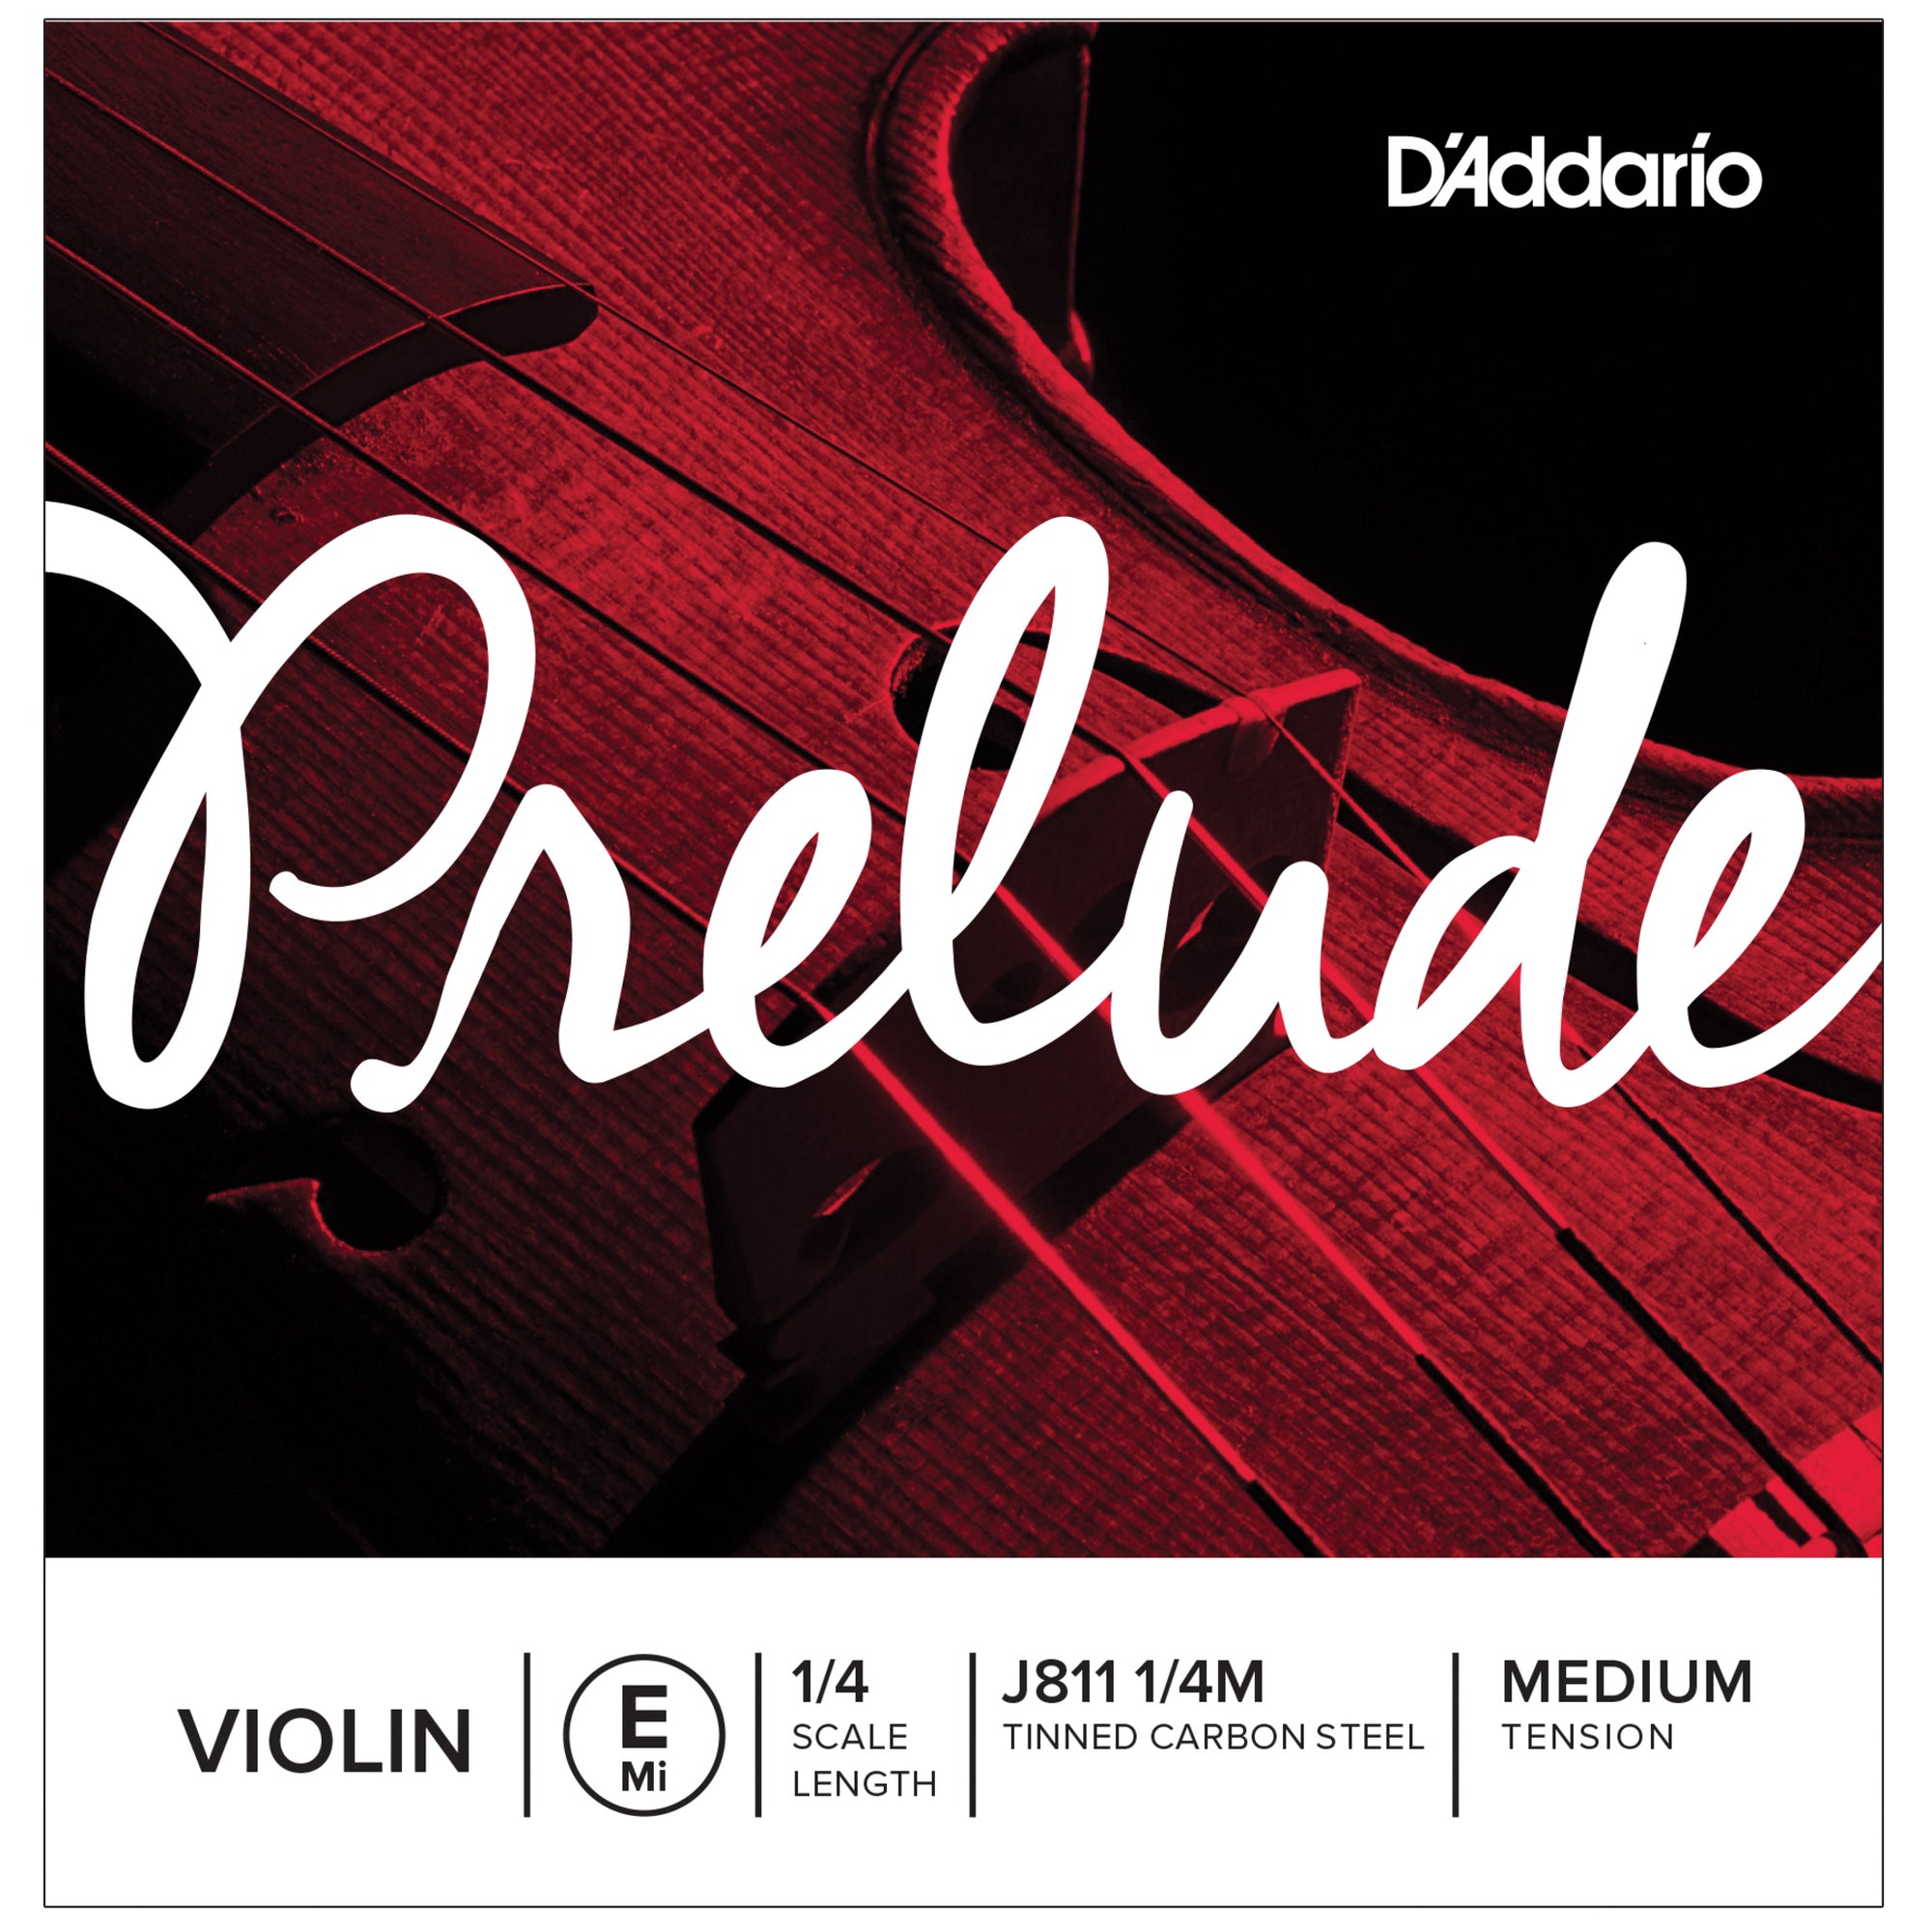 D'Addario J811 1/4M Prelude 1/4 E Violin Single String Medium J811